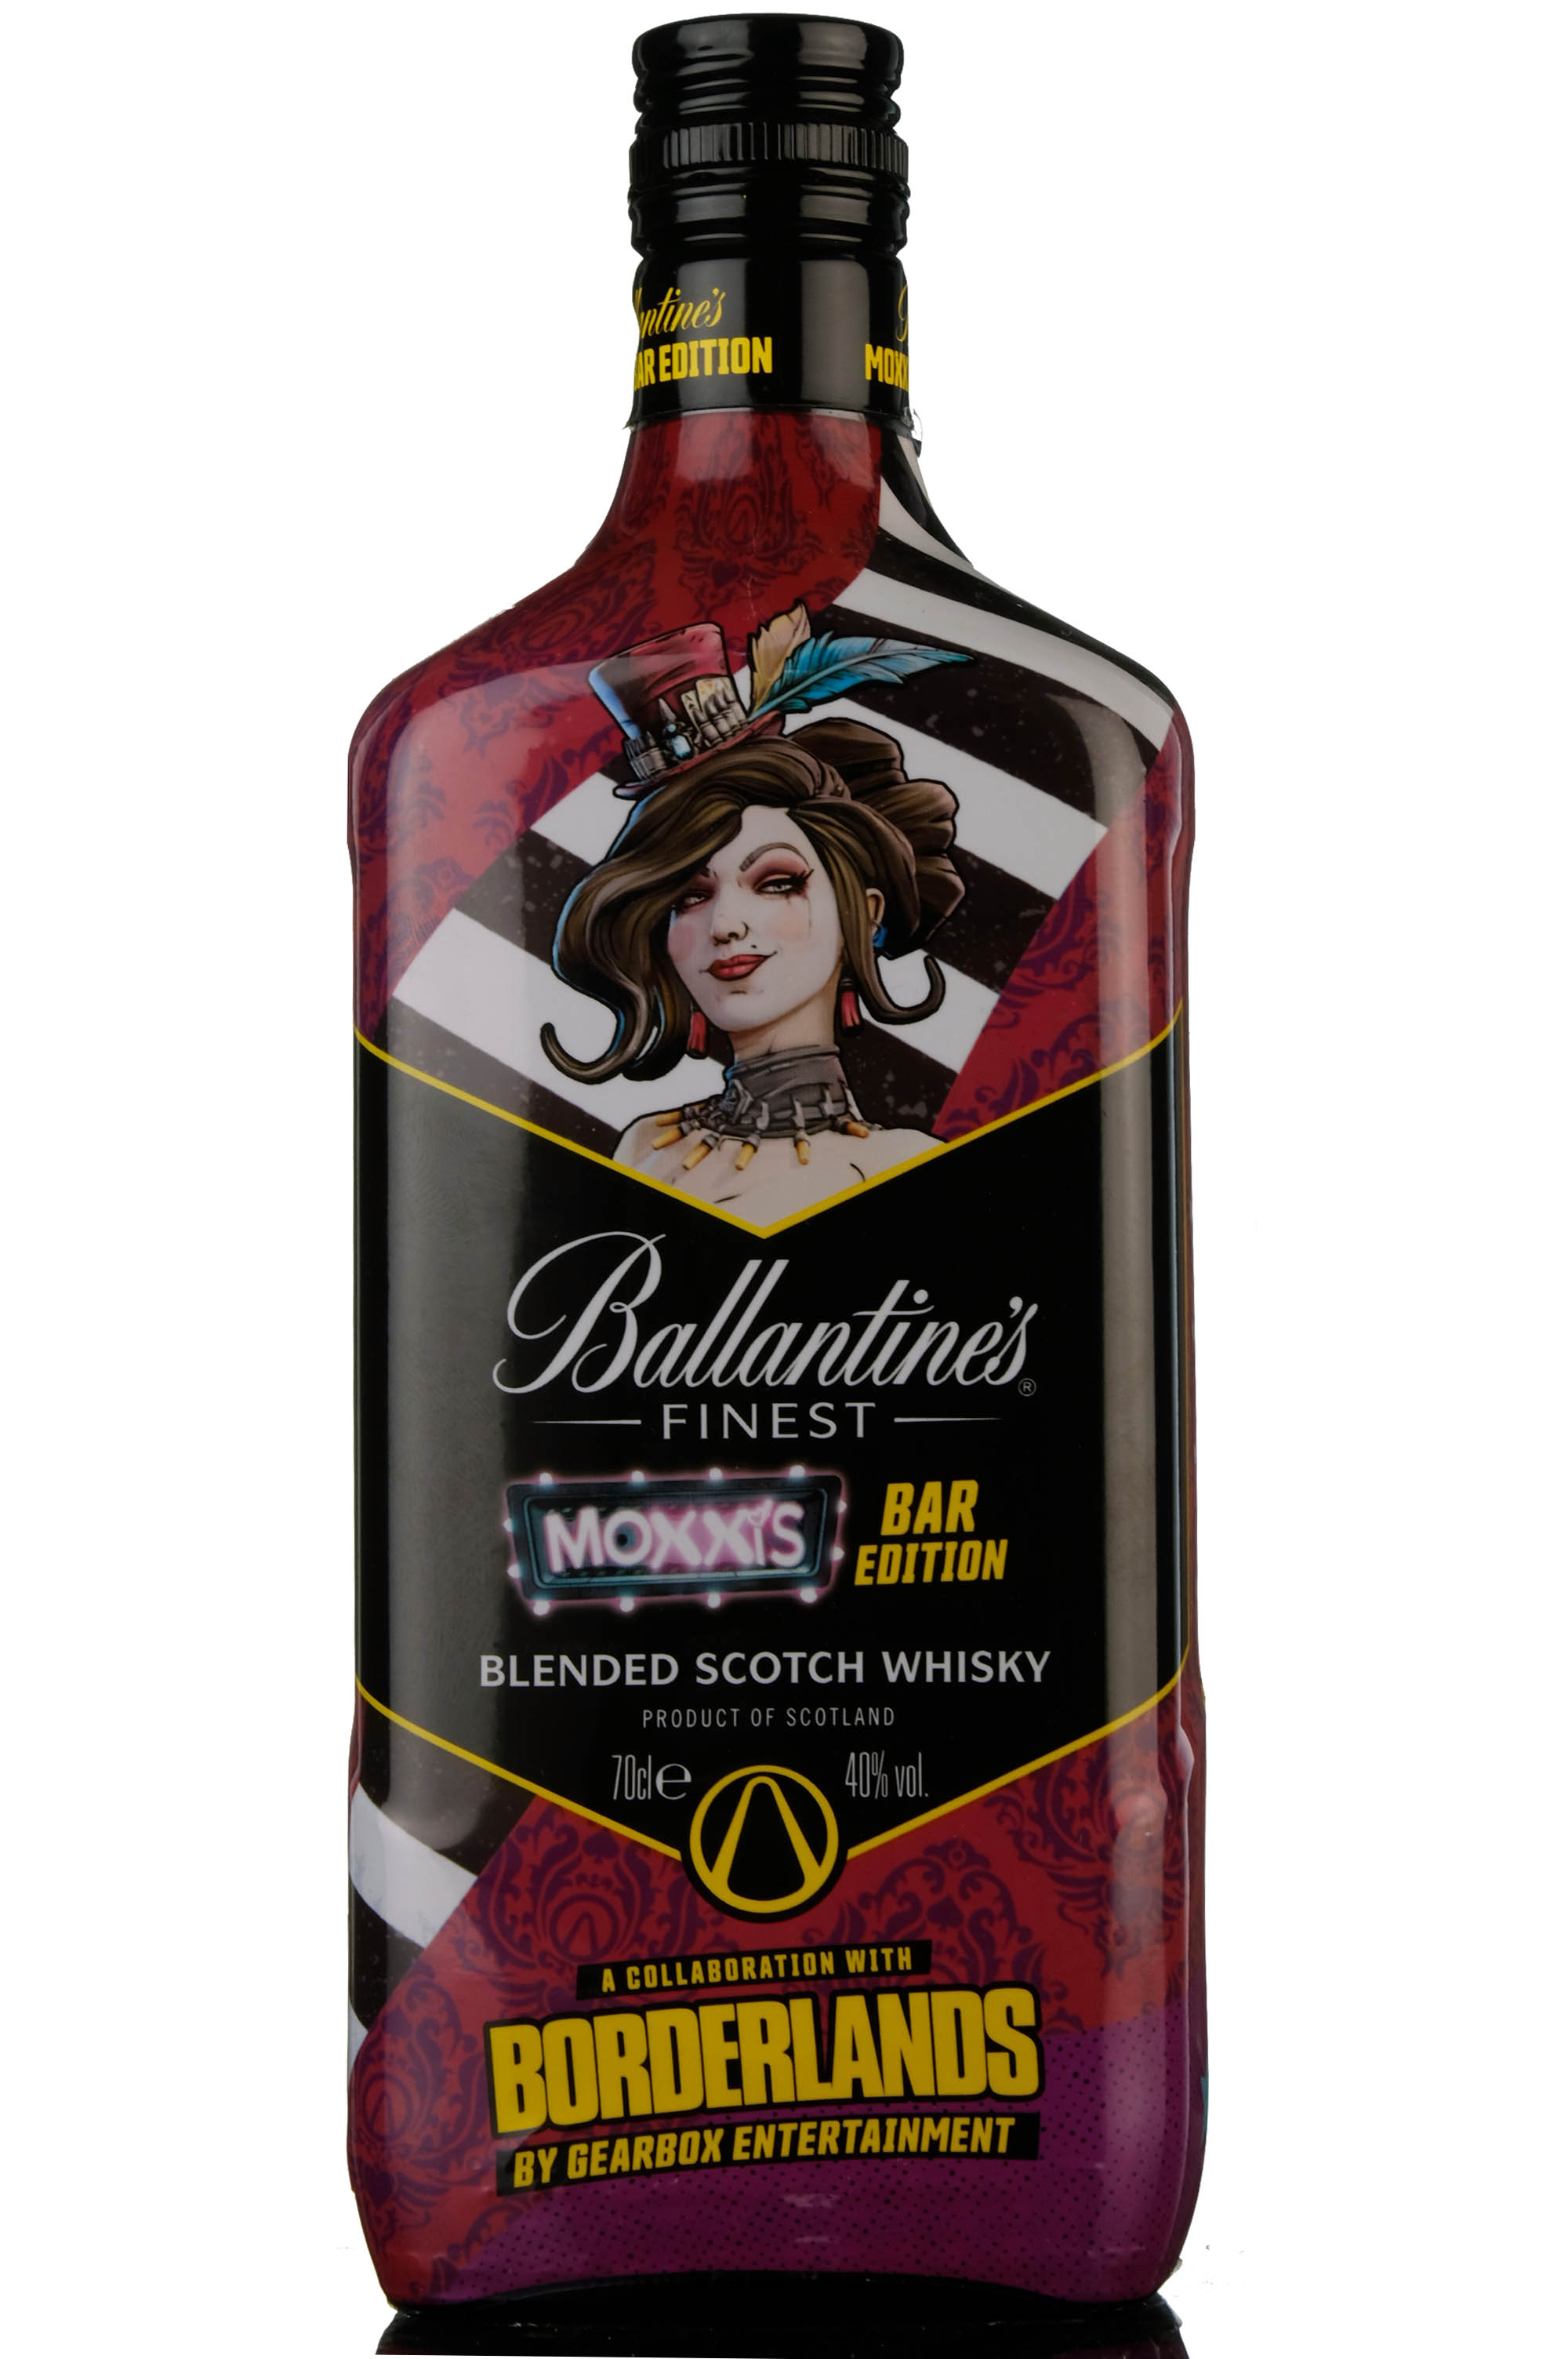 Ballantines Finest - Moxxis Bar Edition - 2021 Release